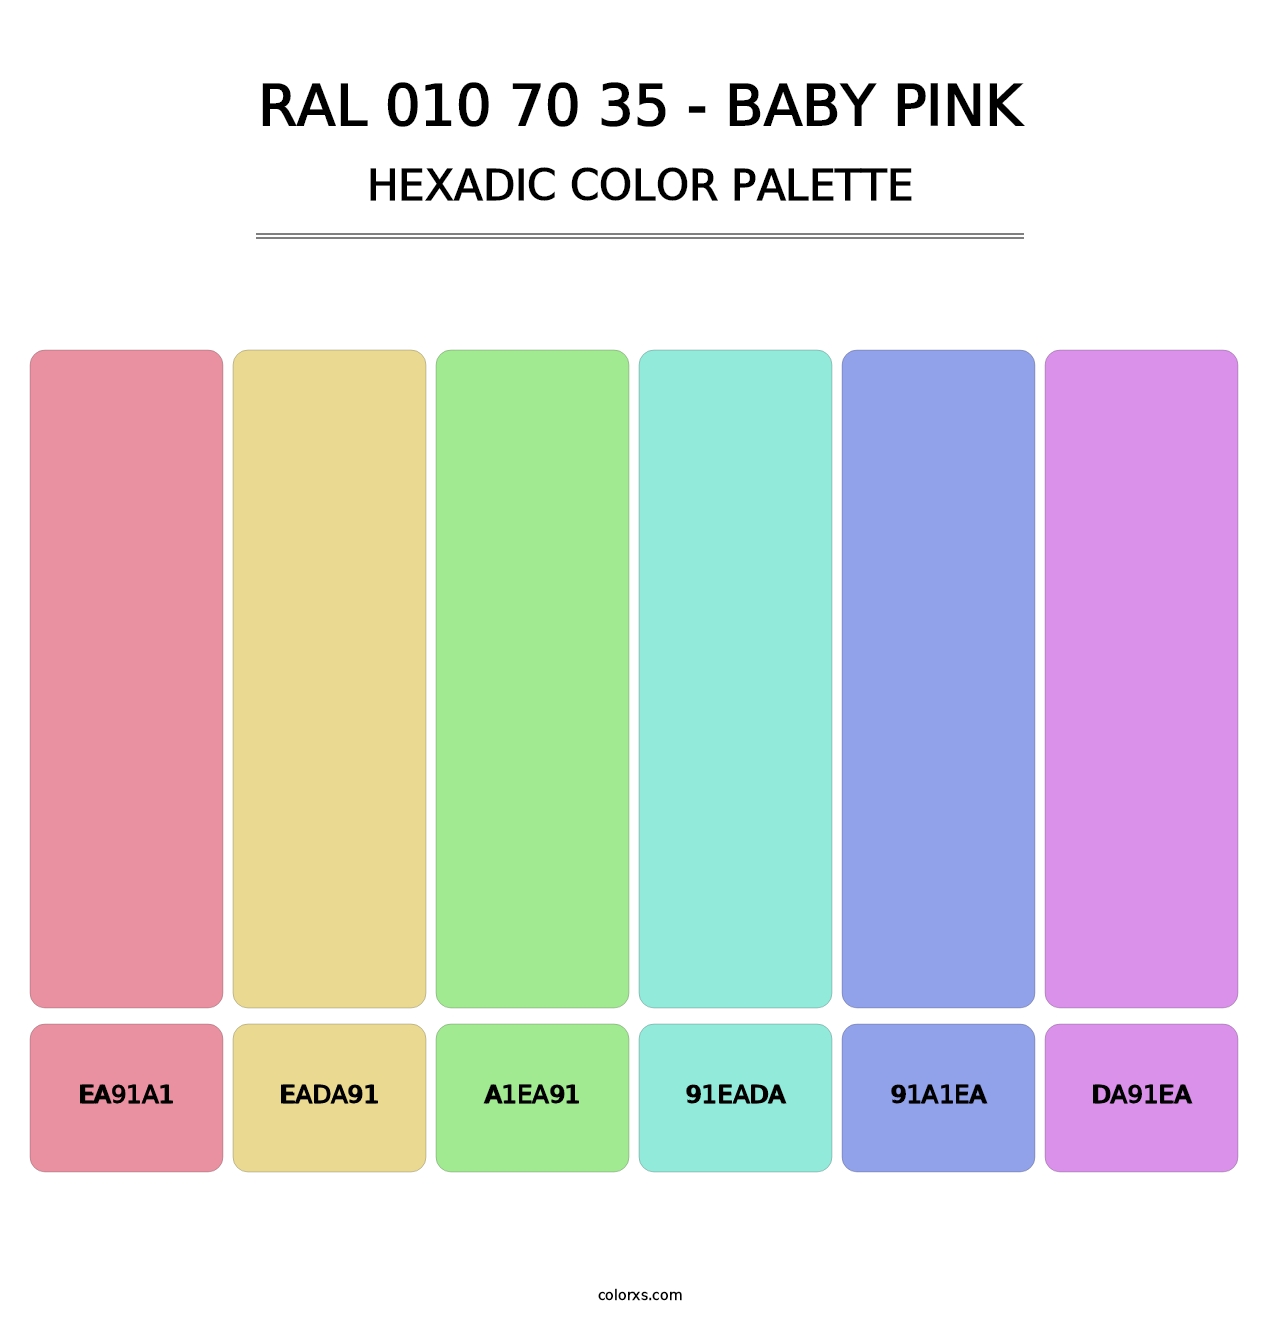 RAL 010 70 35 - Baby Pink - Hexadic Color Palette